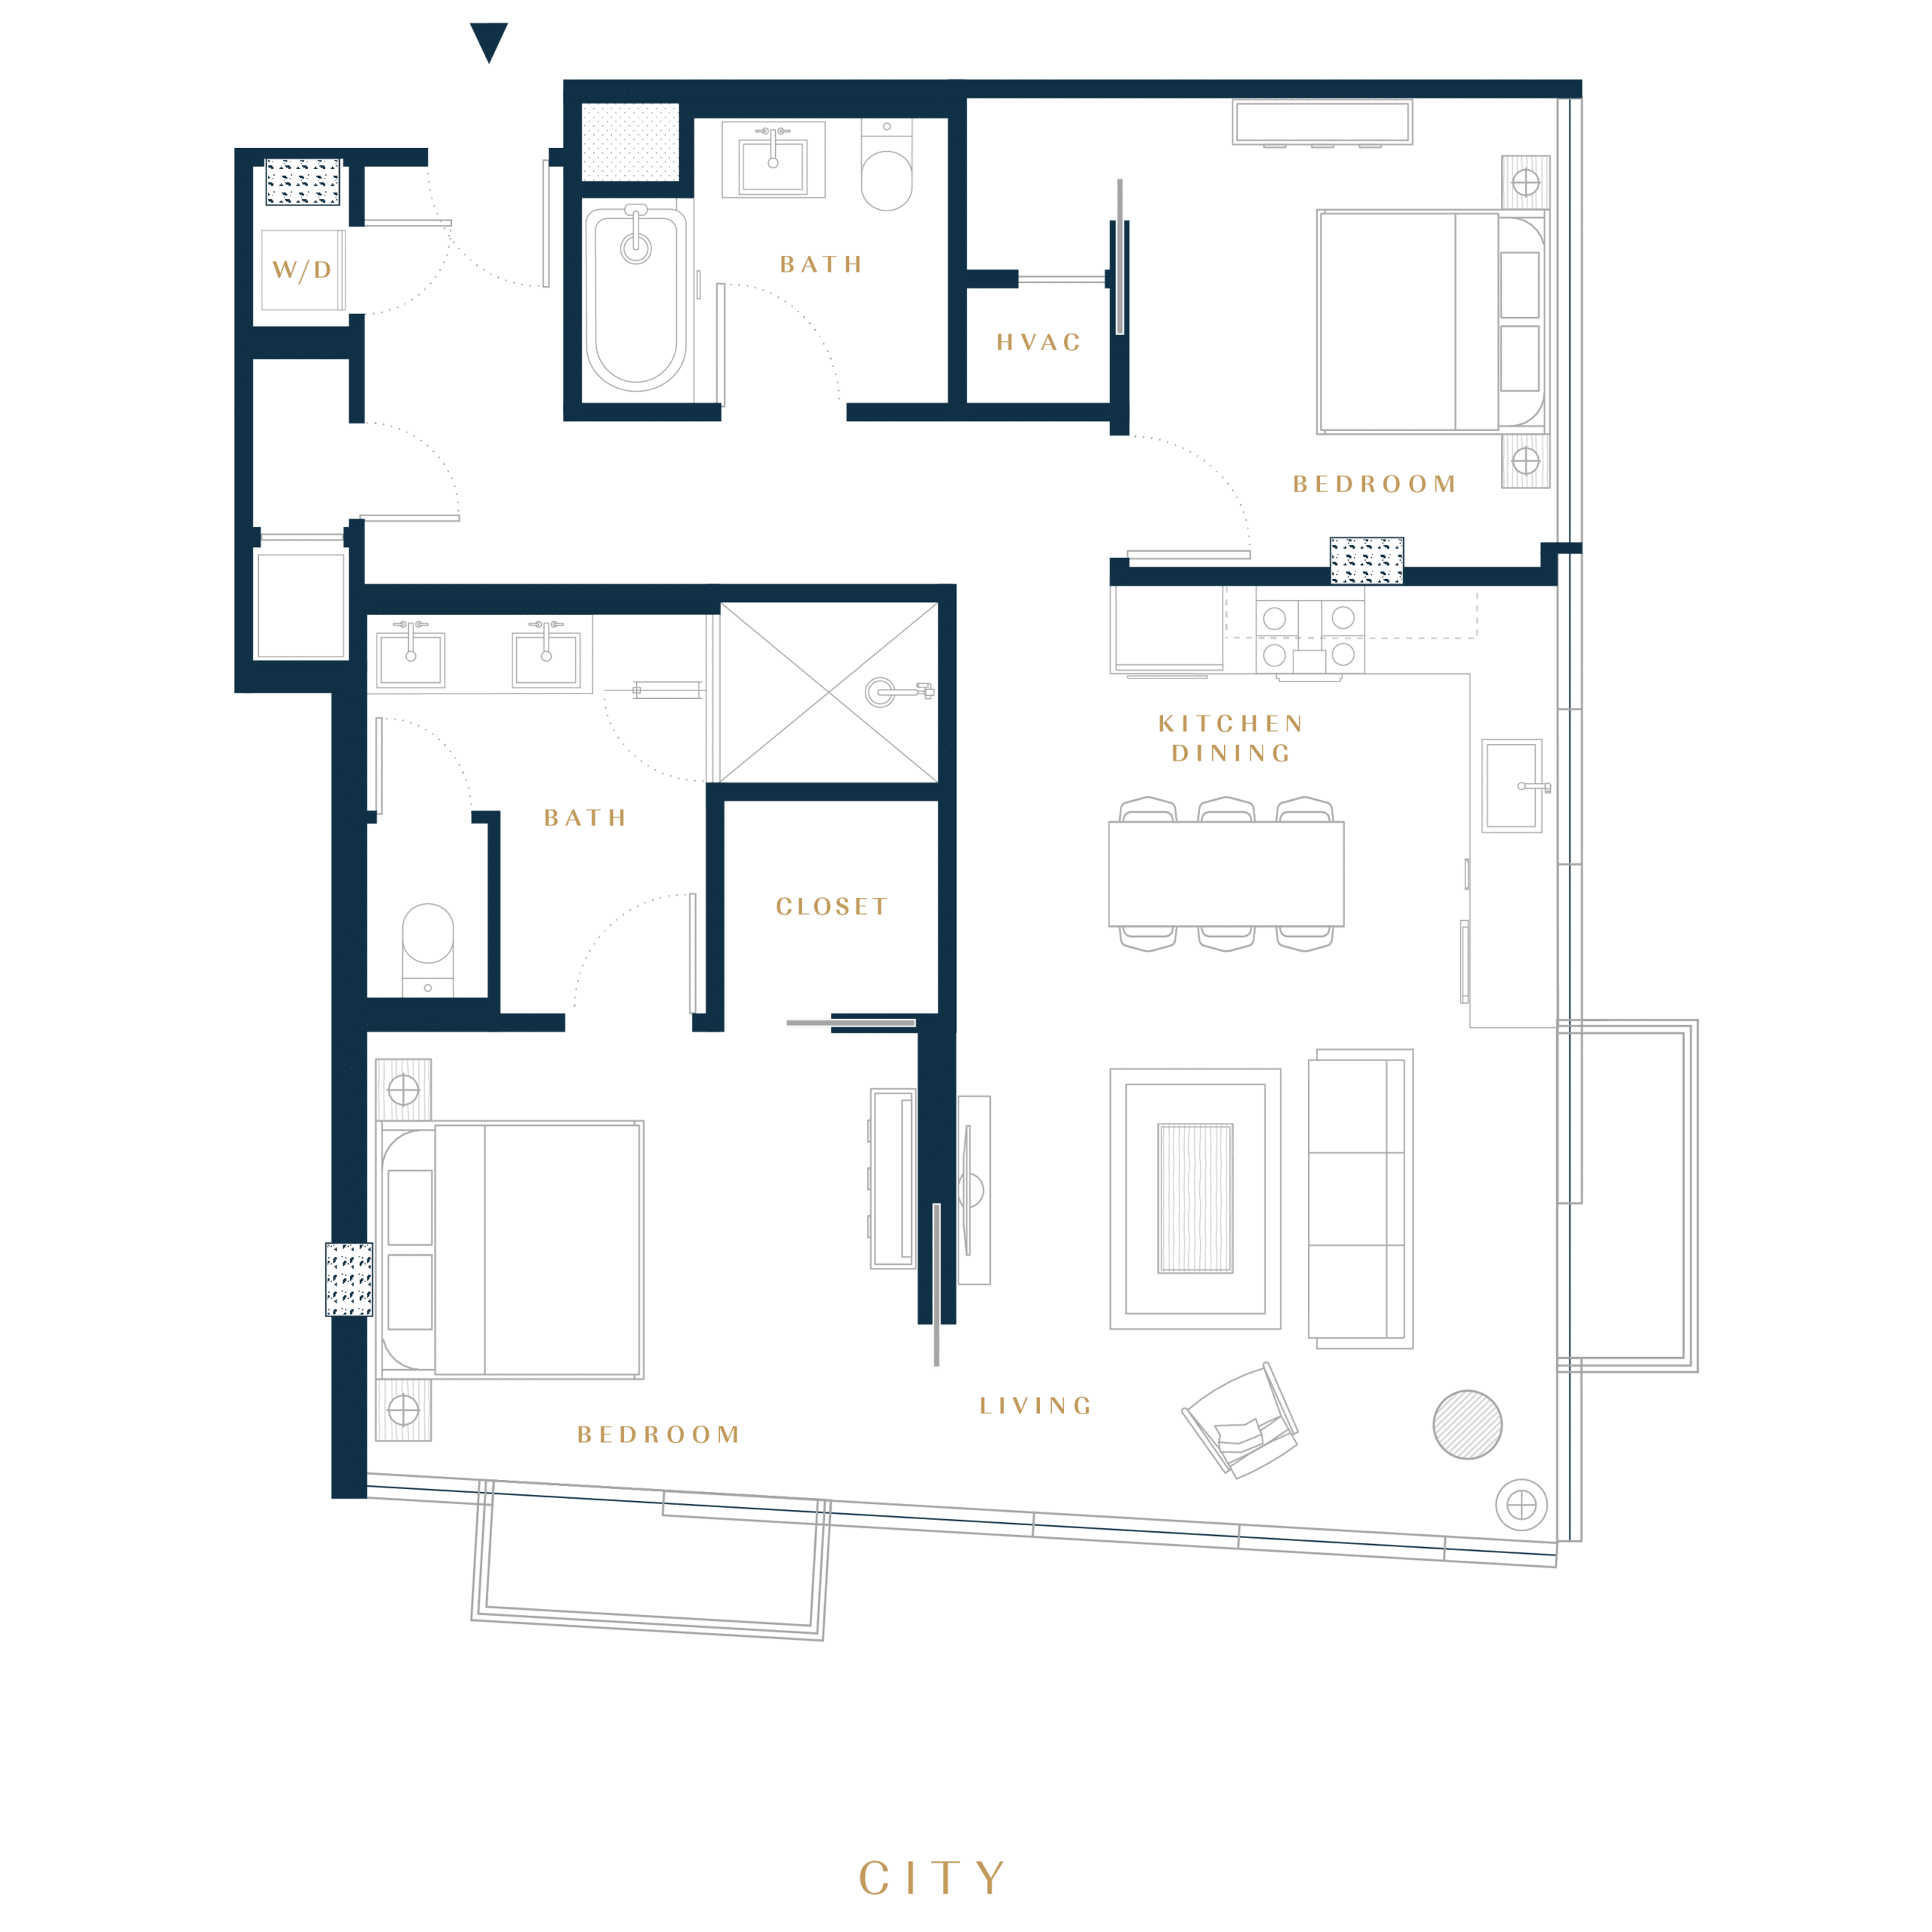 Residence 2C luxury condo floor plan in San Francisco Dogpatch